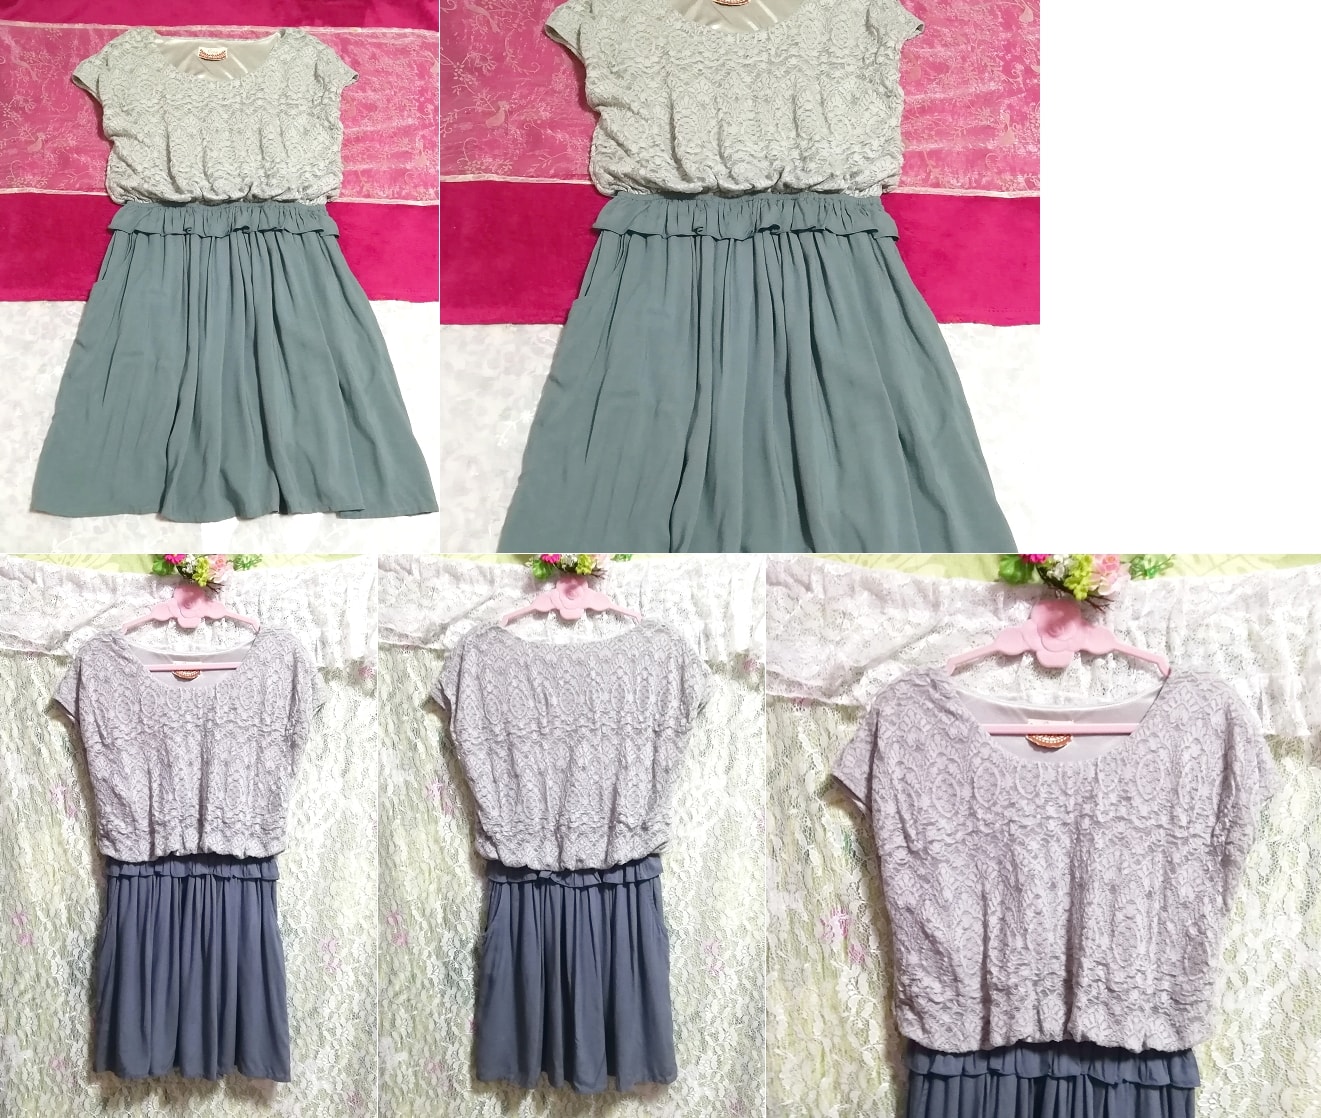 Ash gray lace skirt short sleeve negligee nightgown tunic dress, mini skirt, m size